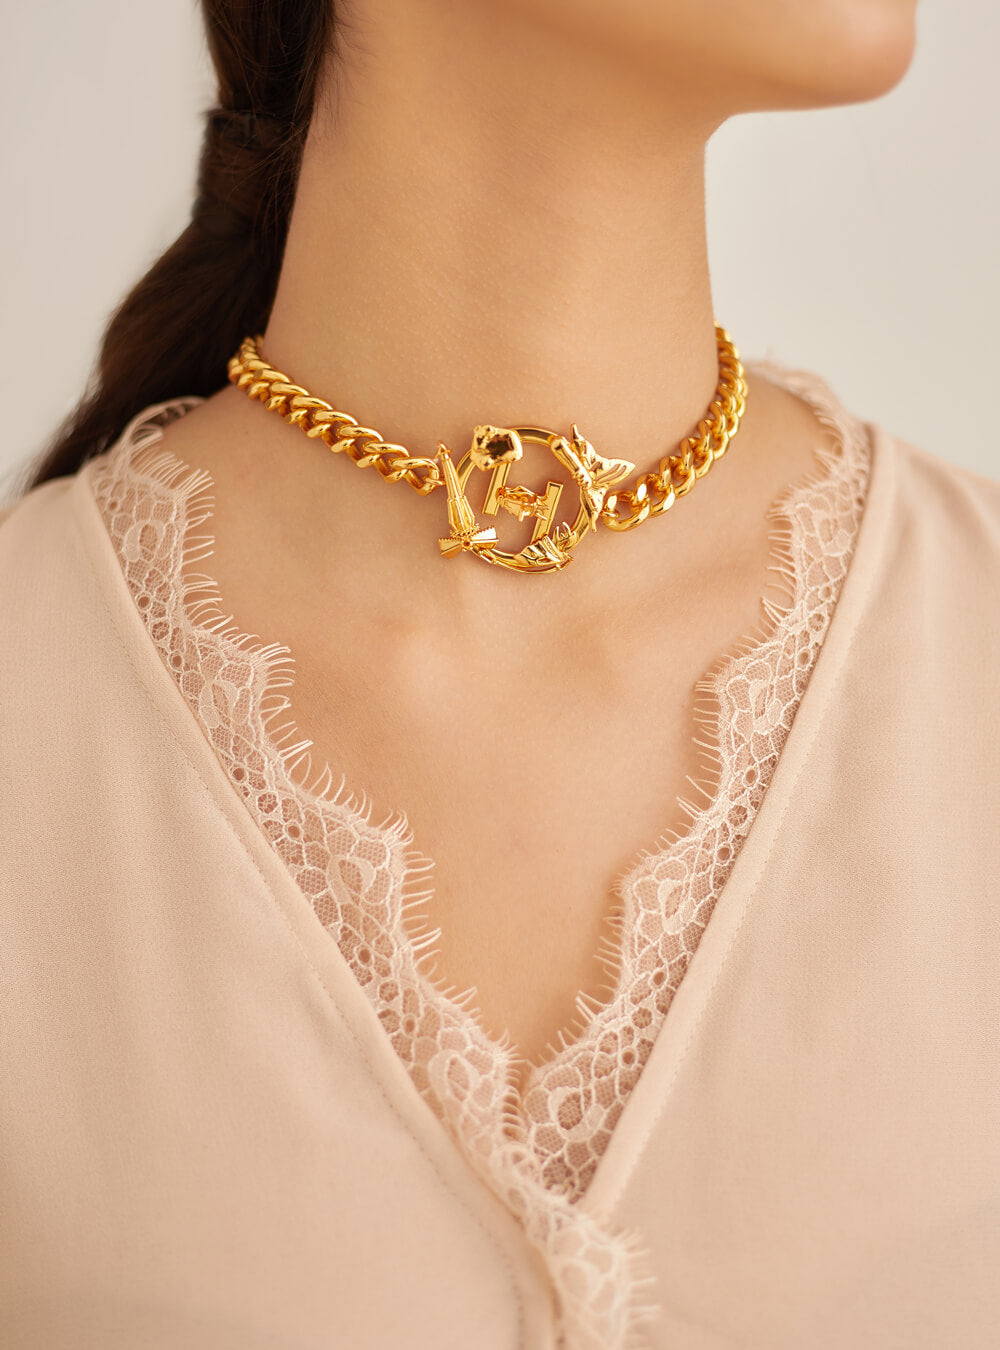 Sukkhi Gold Gold Plated Choker Necklace Set For Women - Sukkhi.com